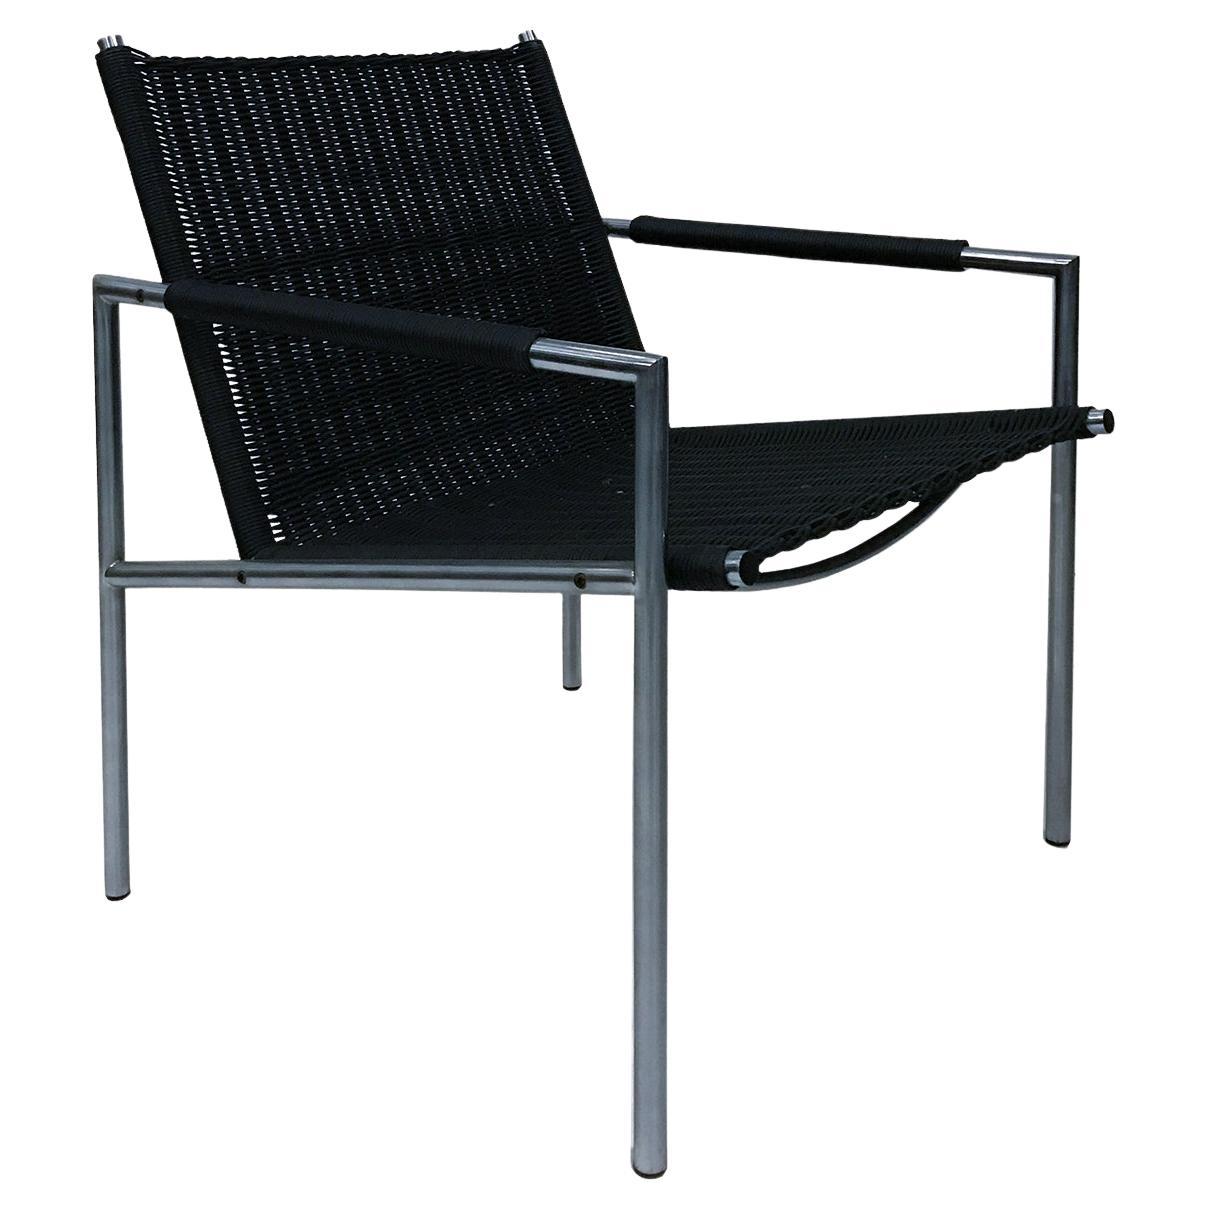 1965, Martin Visser, SZ01 Tubular Easy Chair in Very Rare Black Artificial Cane For Sale